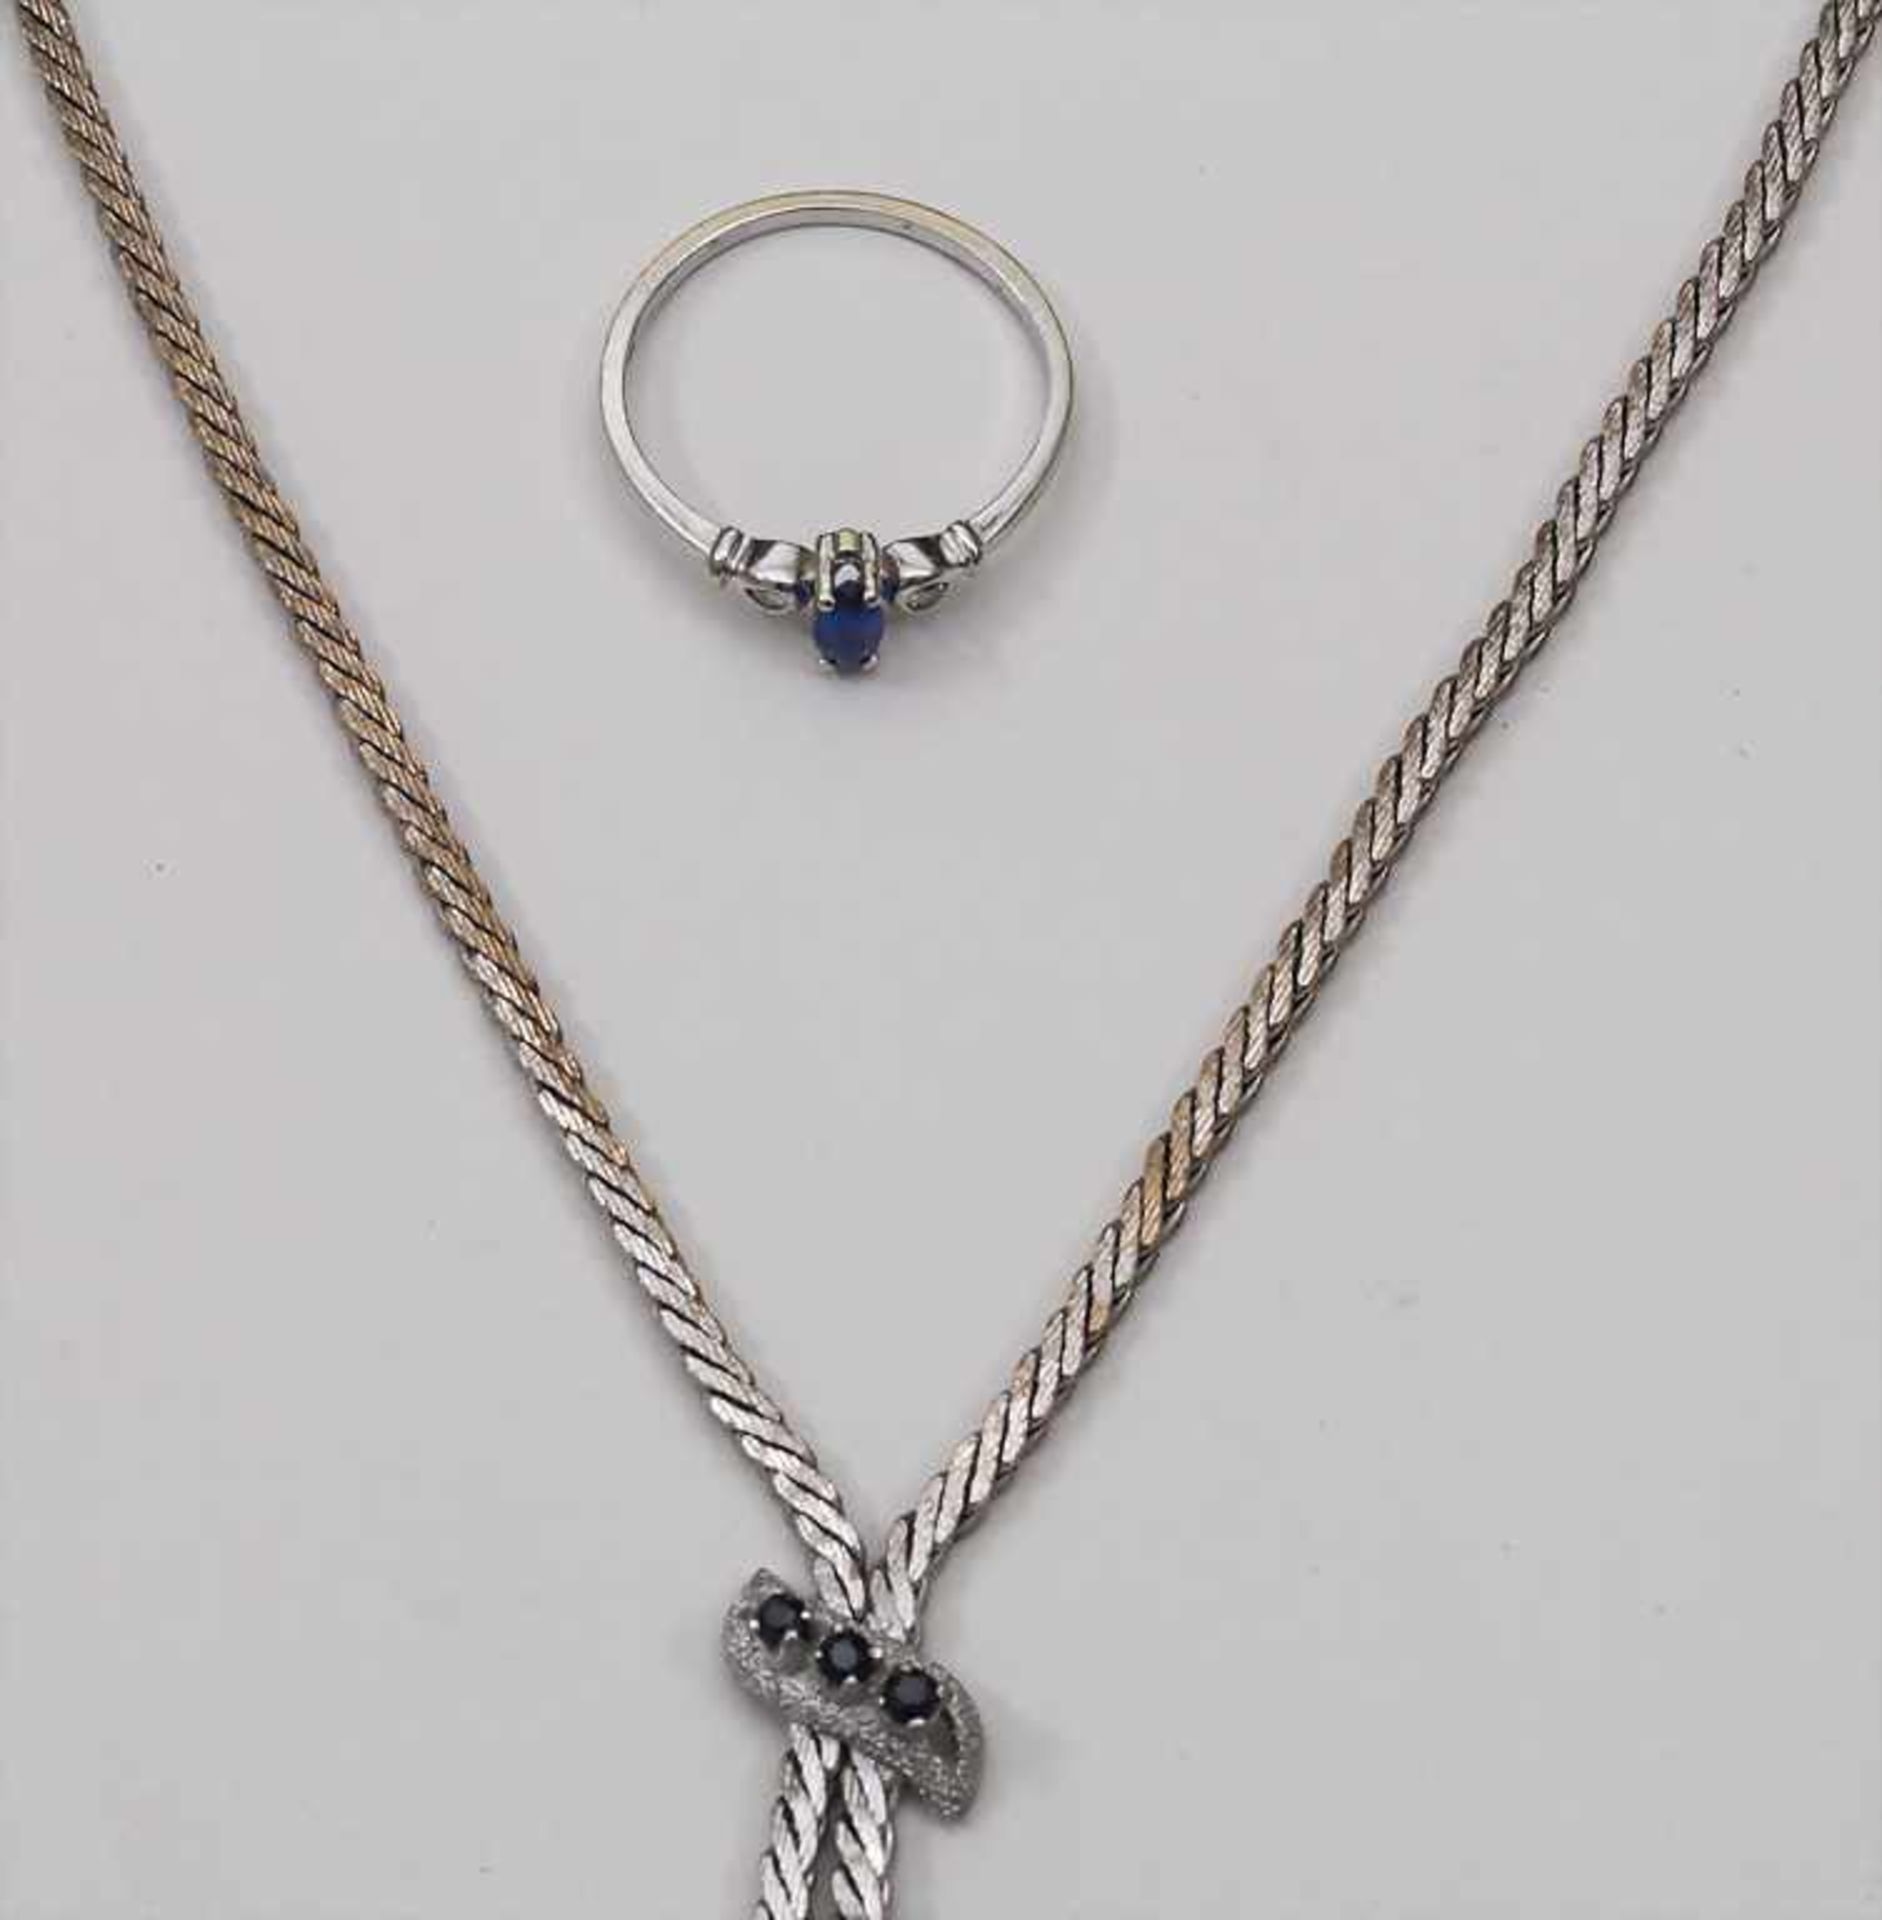 Weißgold Collier und Ring / White gold necklace and ringCollier WG 333/000, blauer Farbstein,Ring: - Image 2 of 2